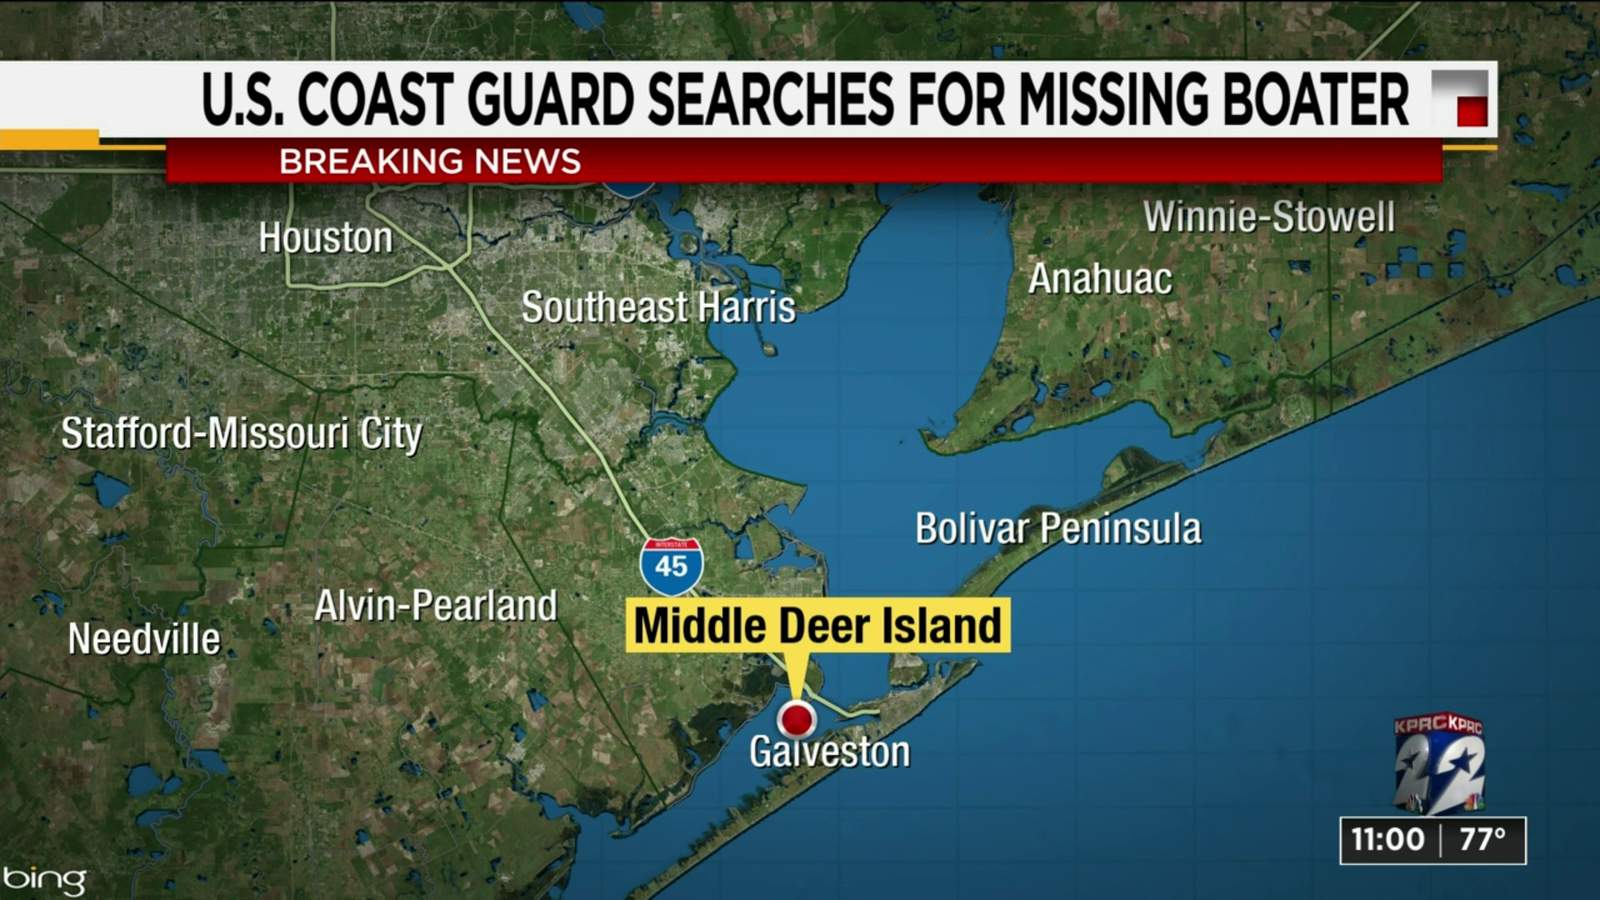 U.S. Coast Guard searches for missing boater near Galveston